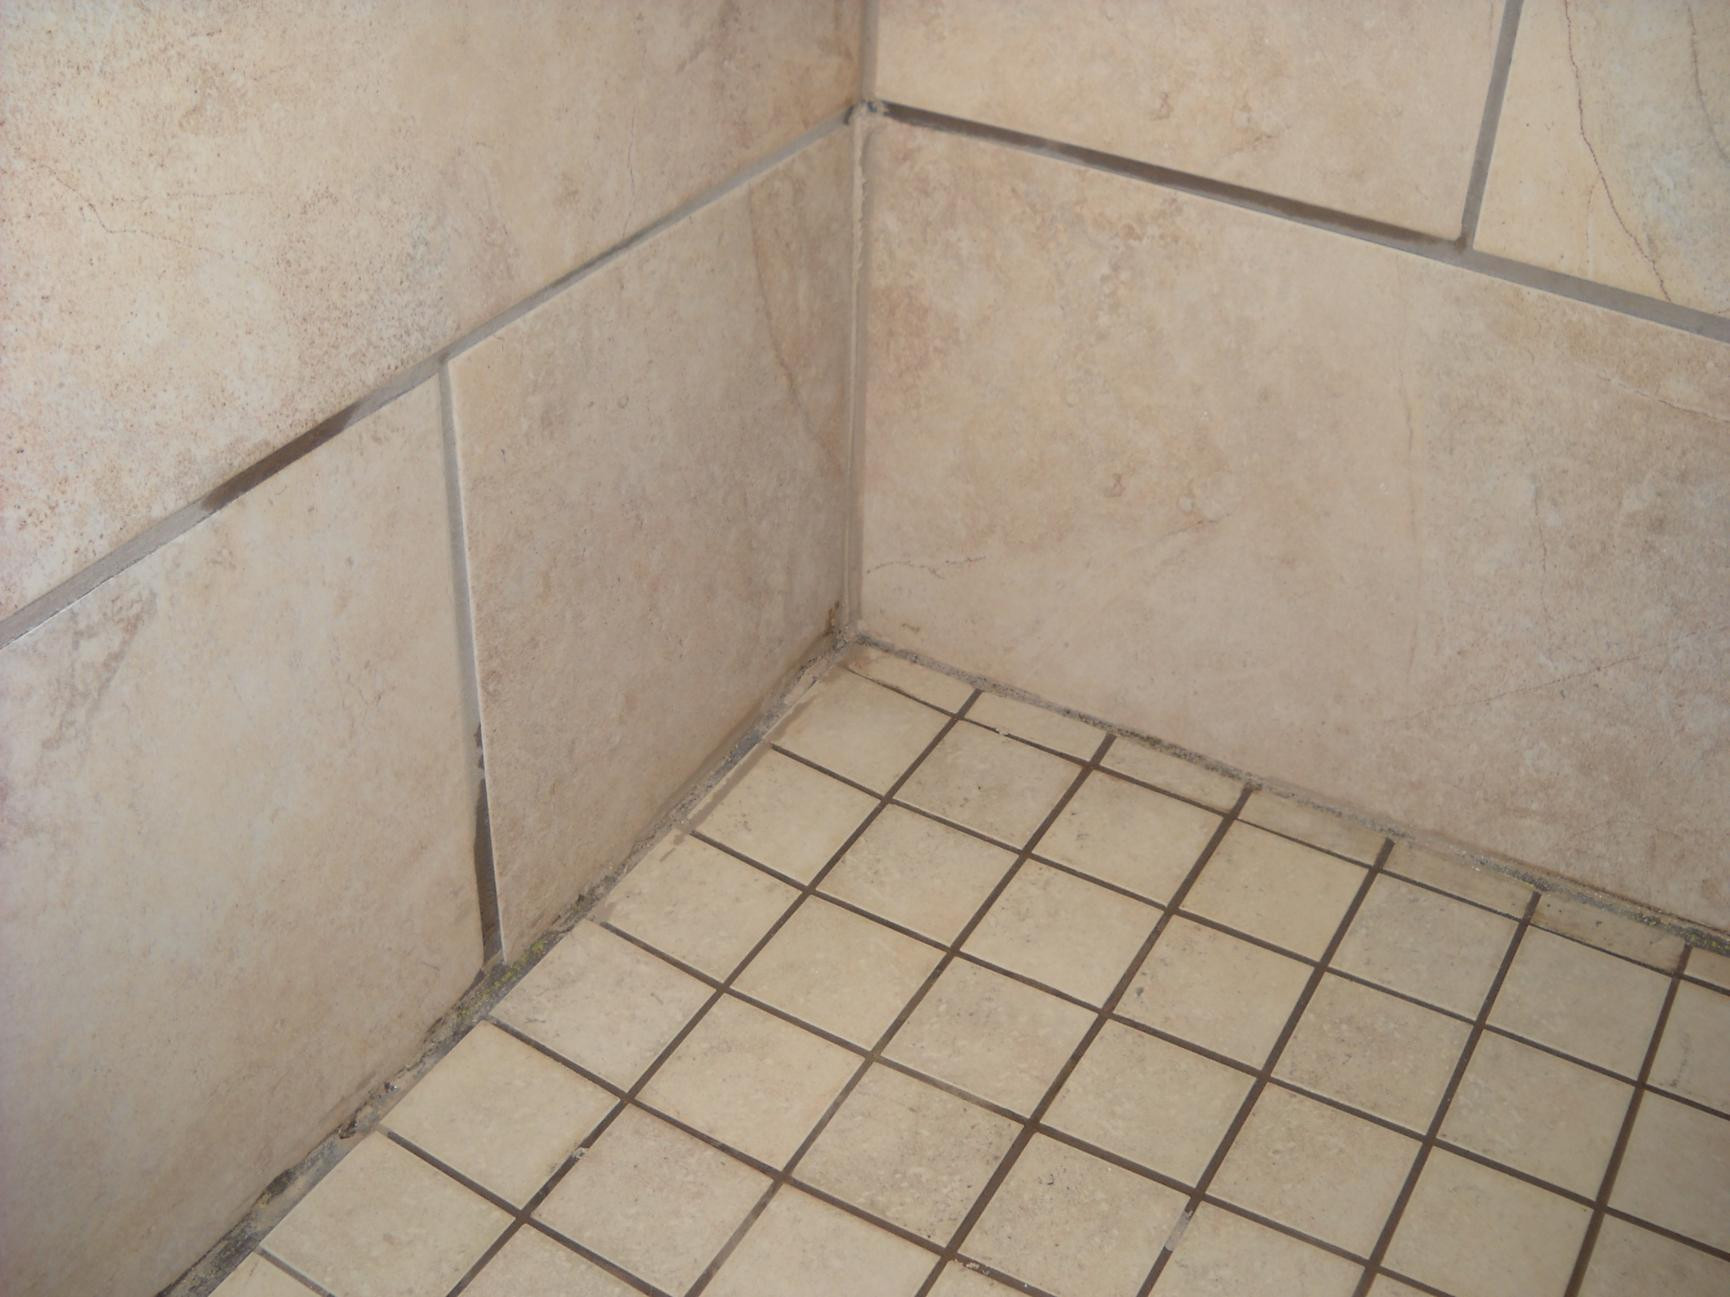 Bathroom Tile Caulk
 Tiled Shower Caulk Kitchens & Baths Contractor Talk